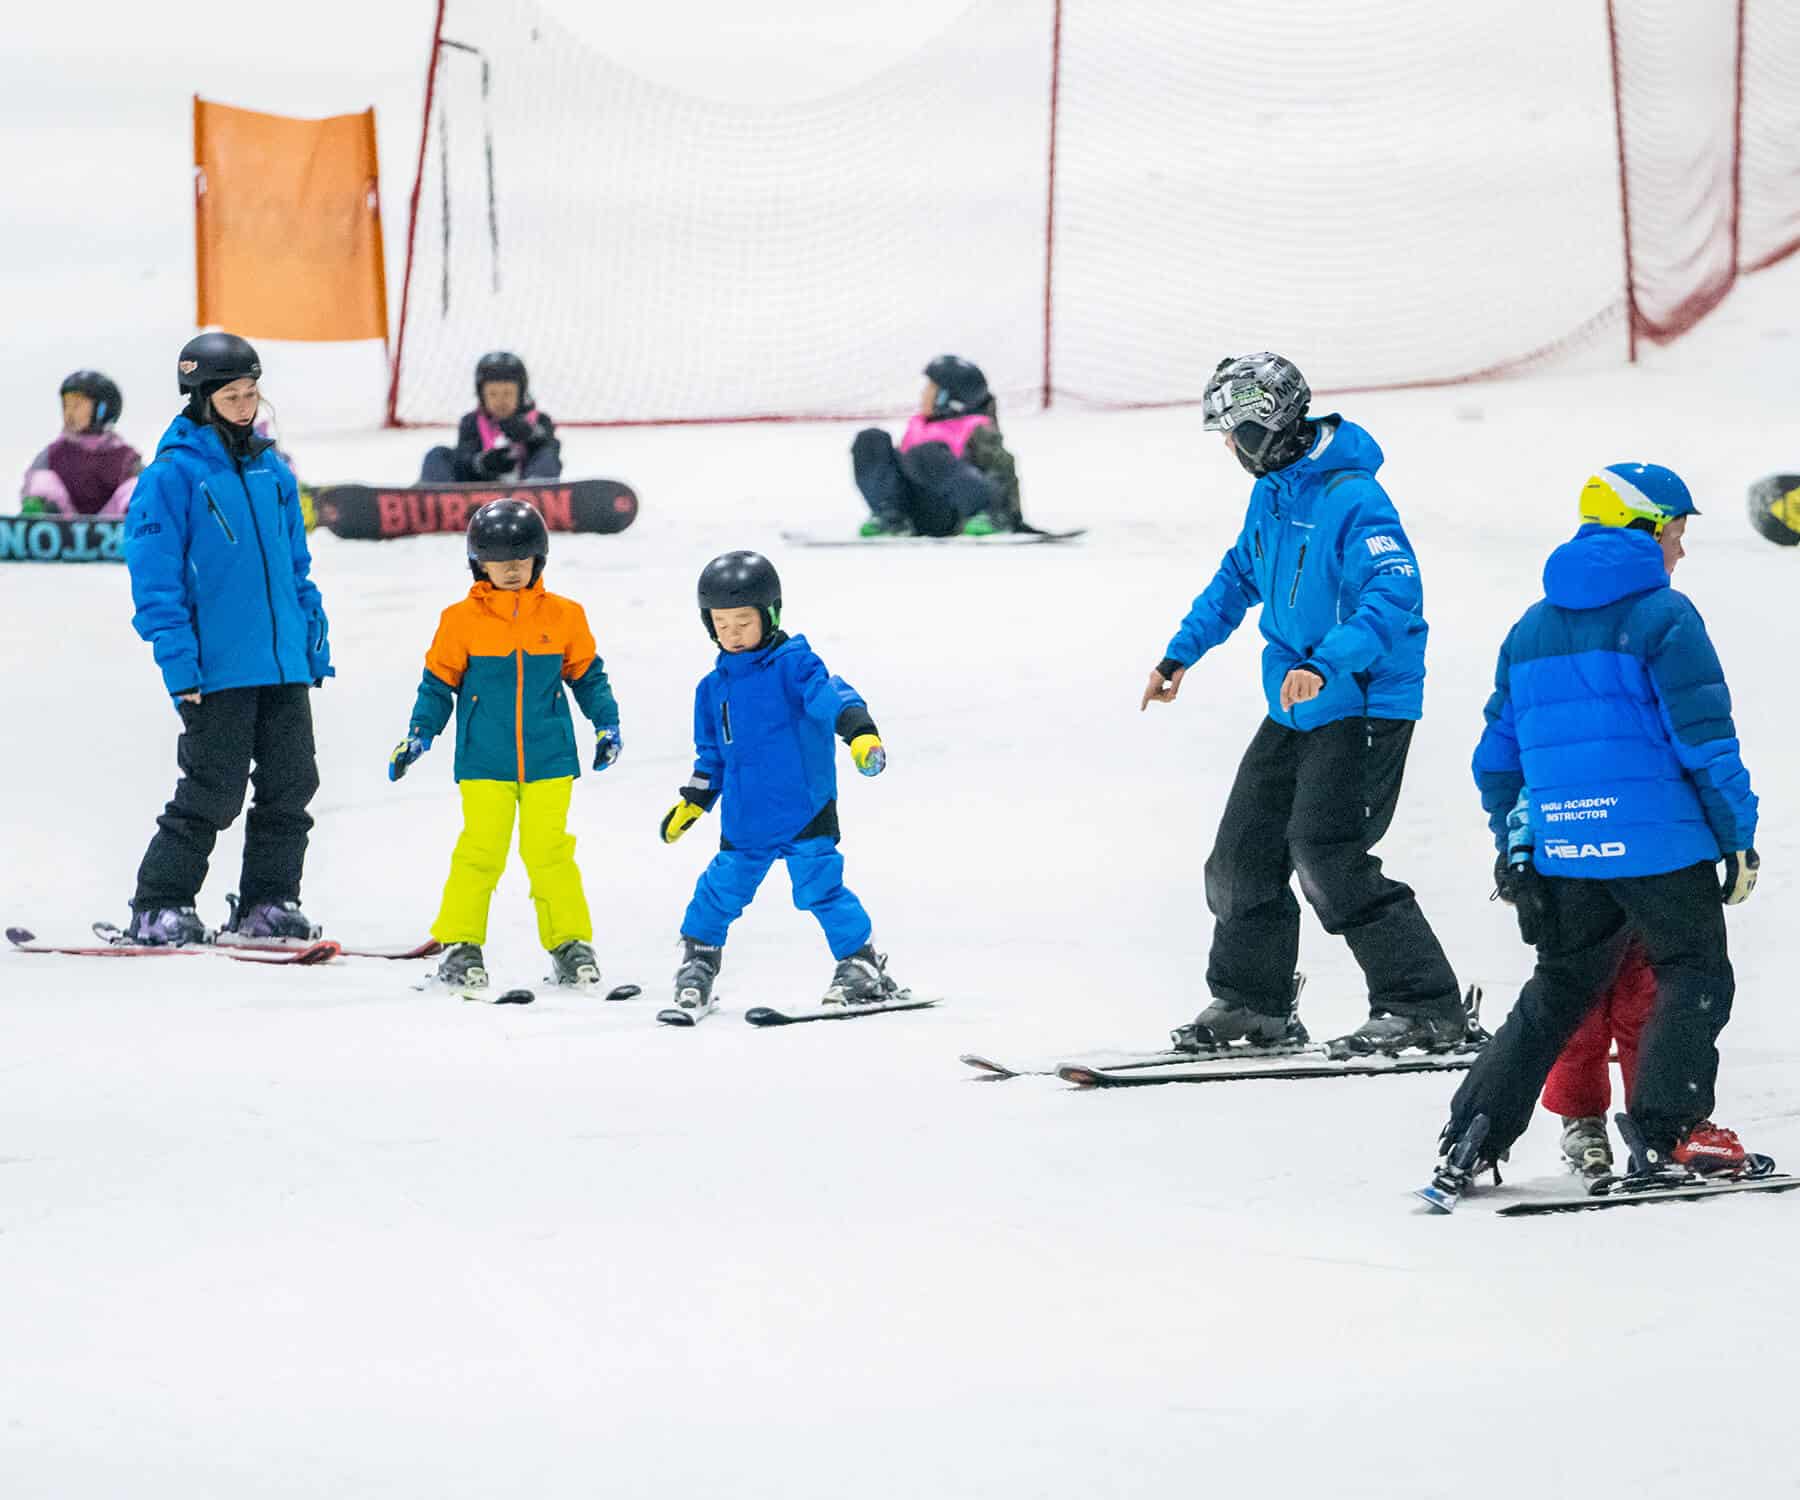 School Ski lesson at Snowplanet